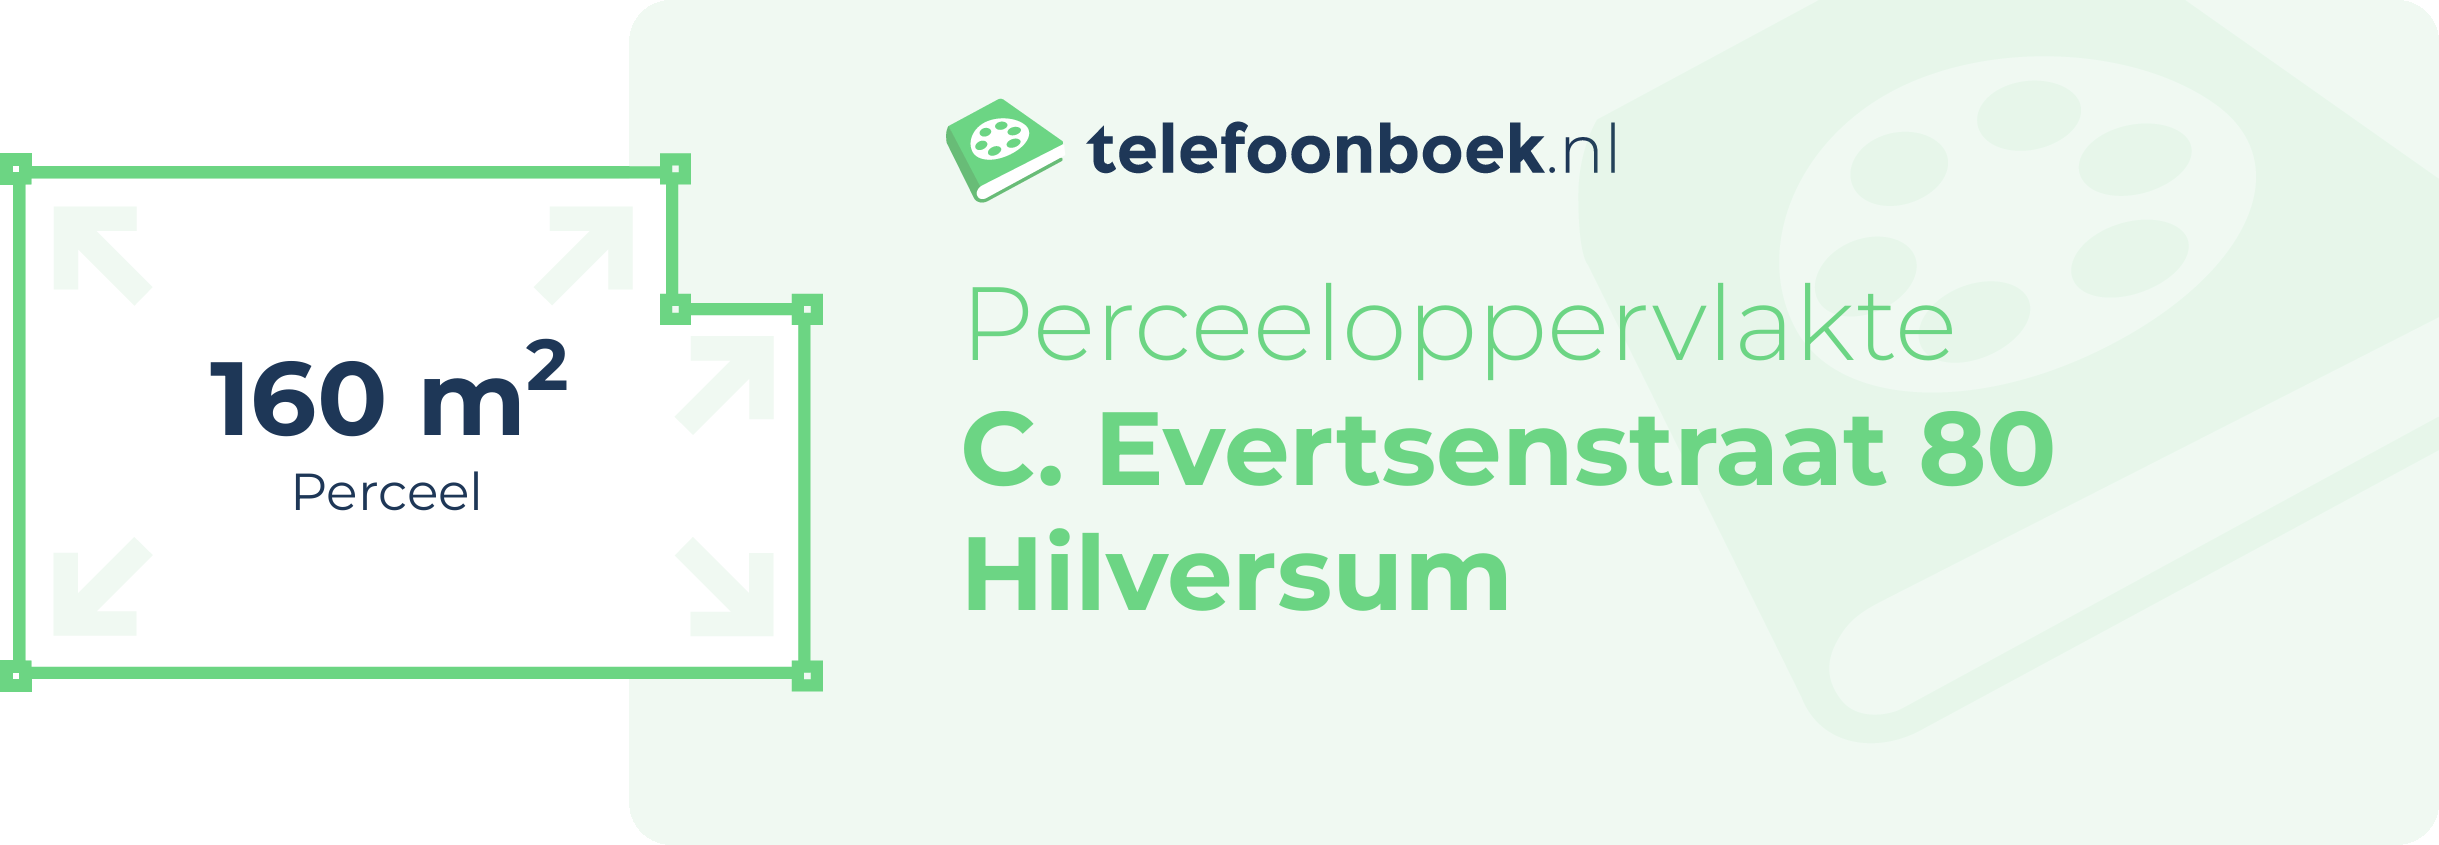 Perceeloppervlakte C. Evertsenstraat 80 Hilversum